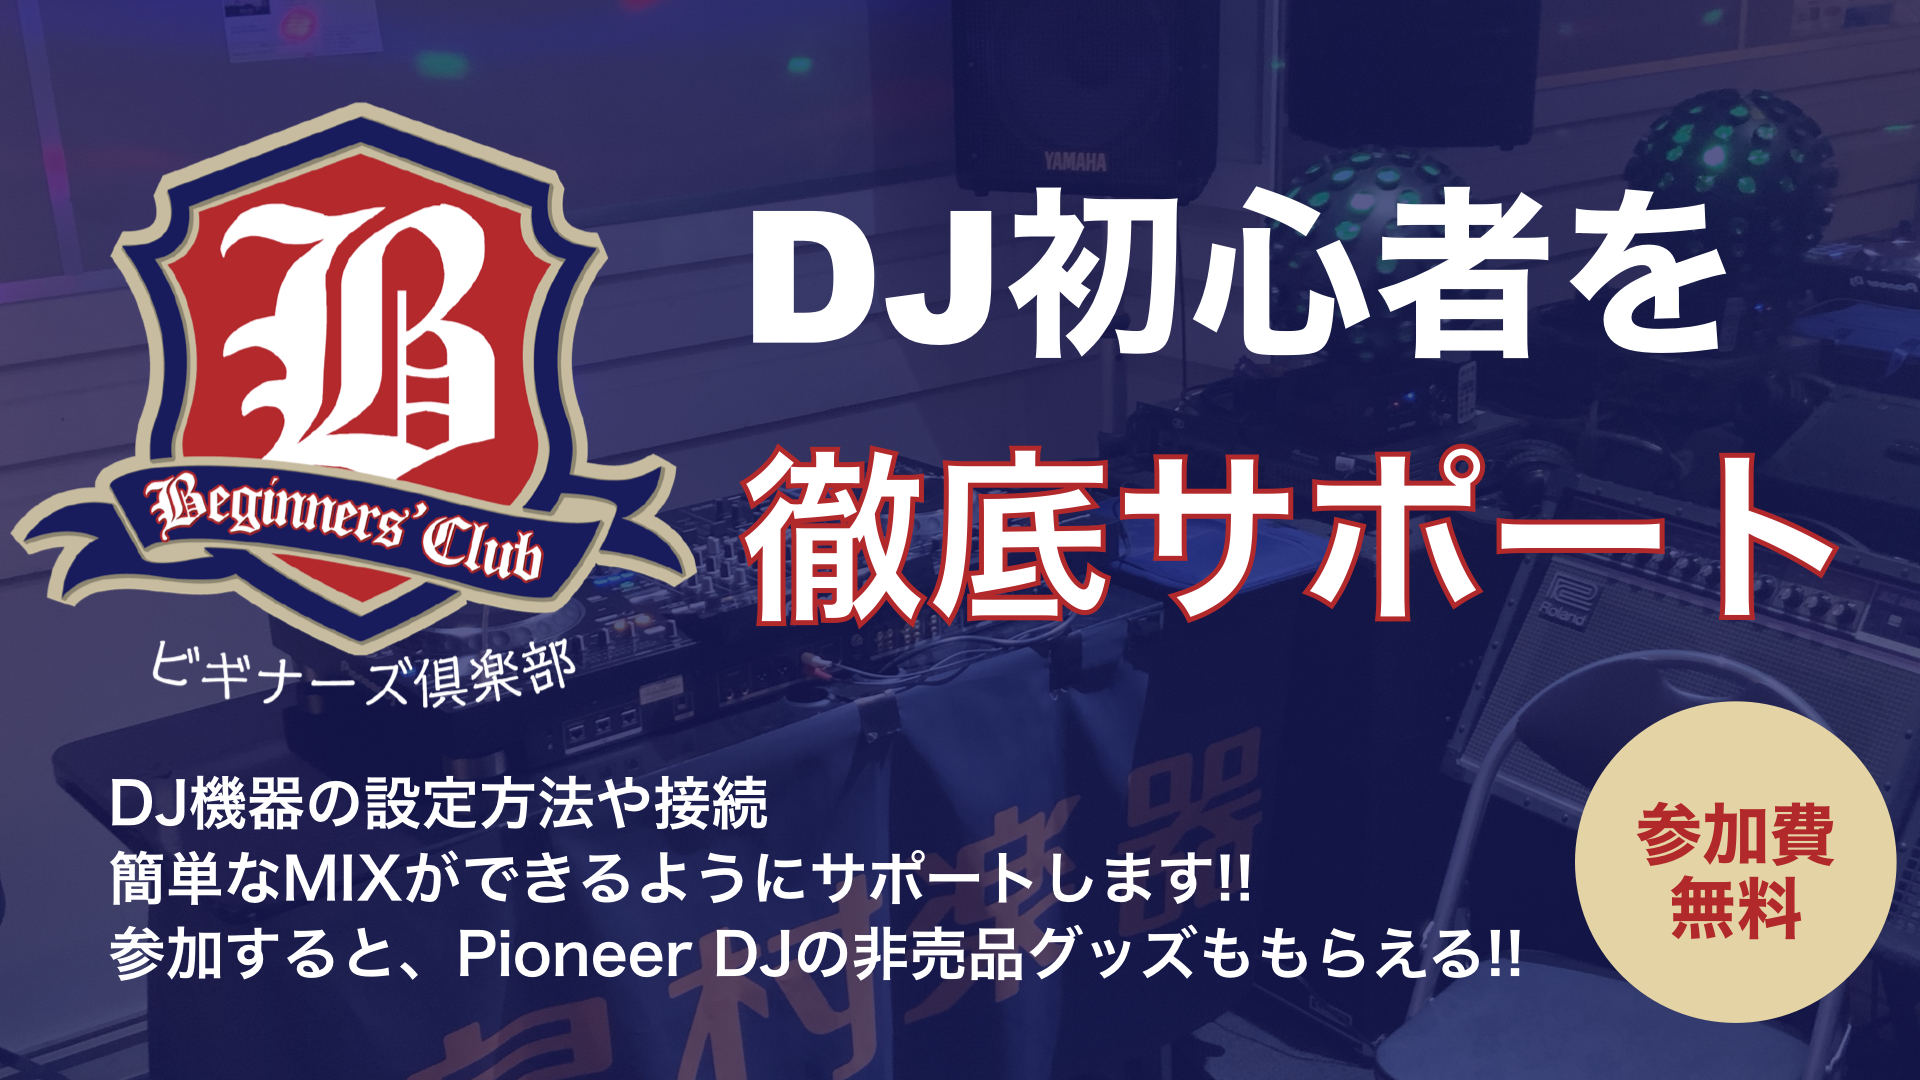 Hamamatsu Ichino DJ Club – DJビギナーズ倶楽部